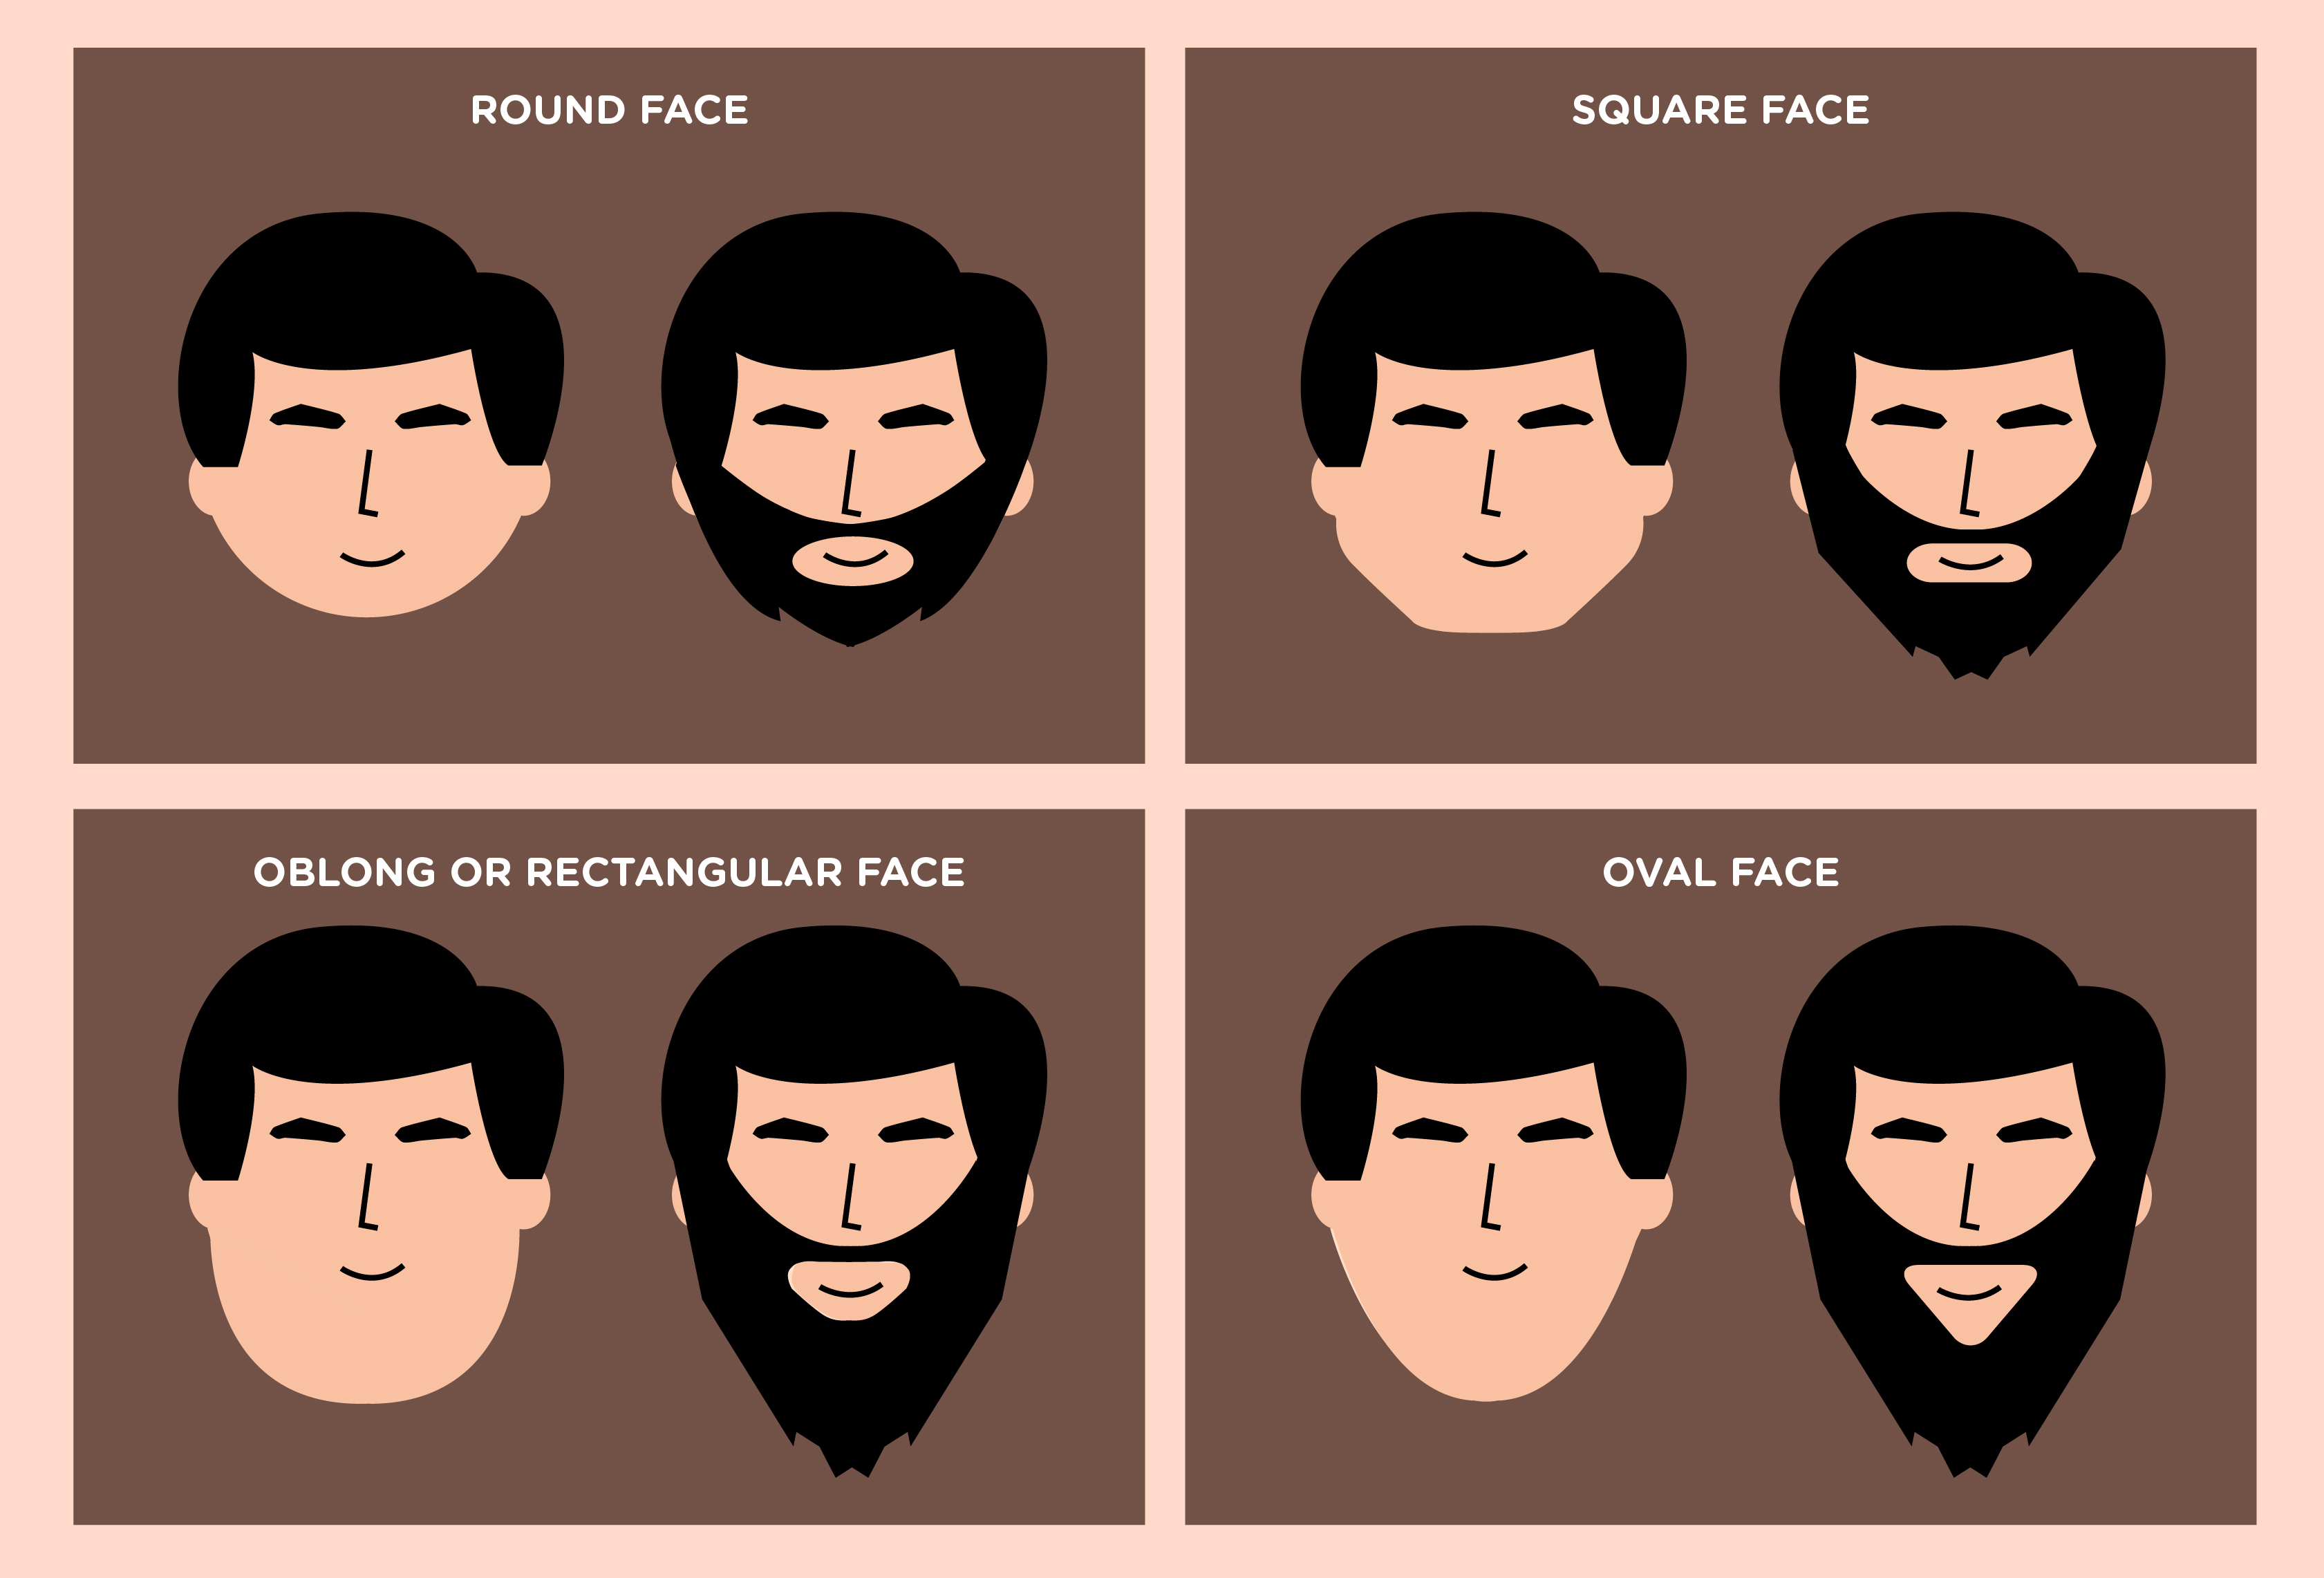 8 Beard Grooming Tips For The Dapper Gentleman